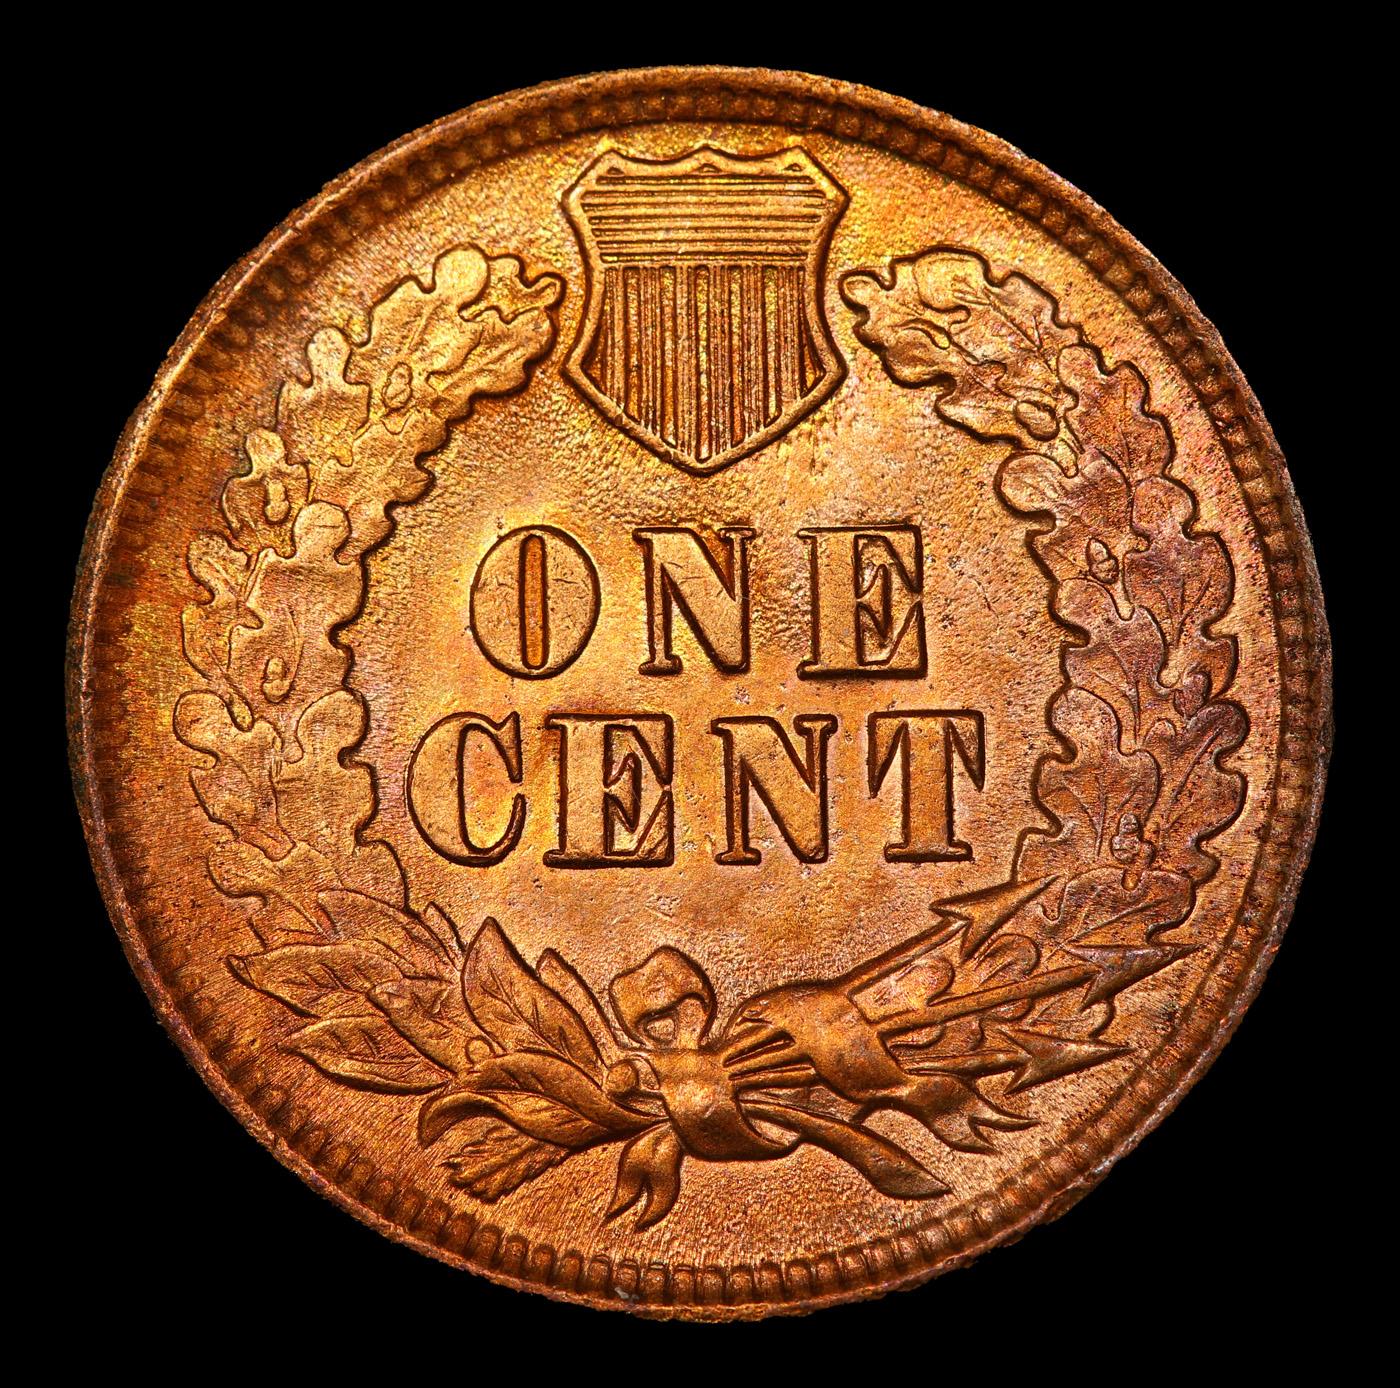 1901 Indian Cent 1c Grades Select Unc RD